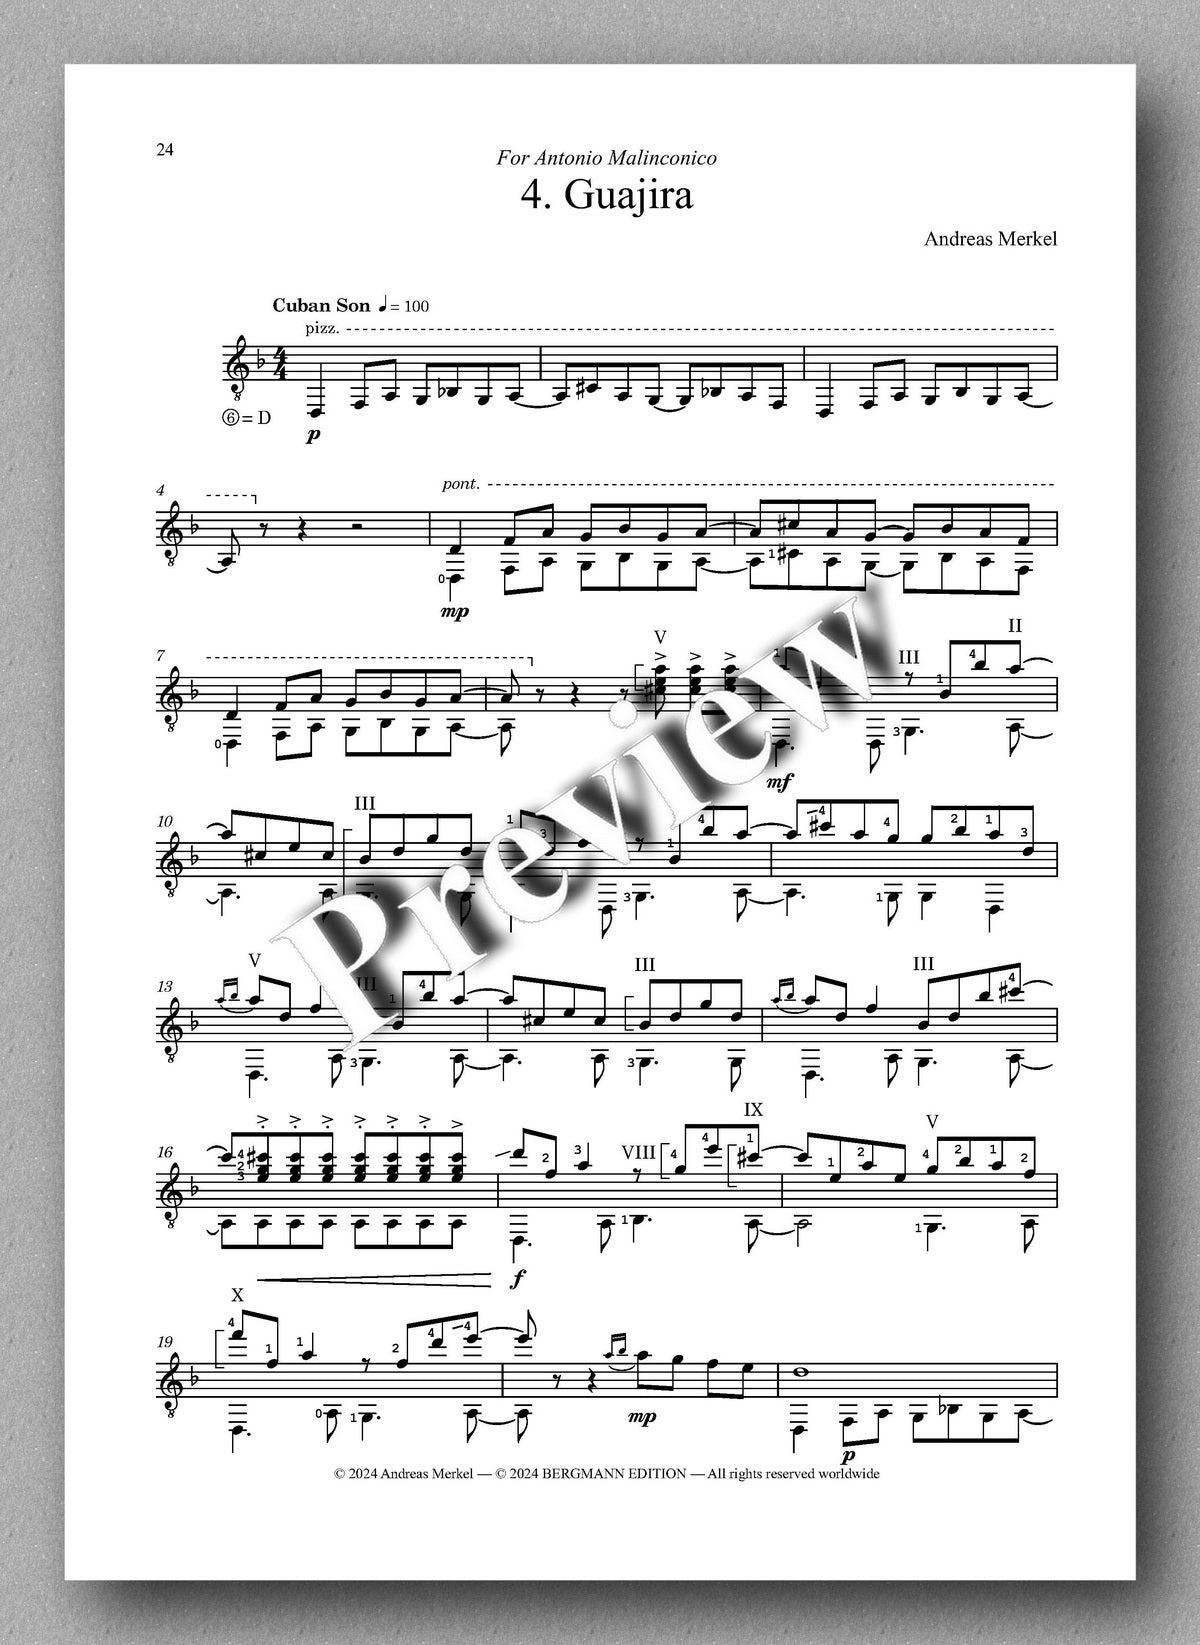 Andreas Merkel, Suite Danzas Cubanas Traditionales, op. 37 - preview of the music score 4